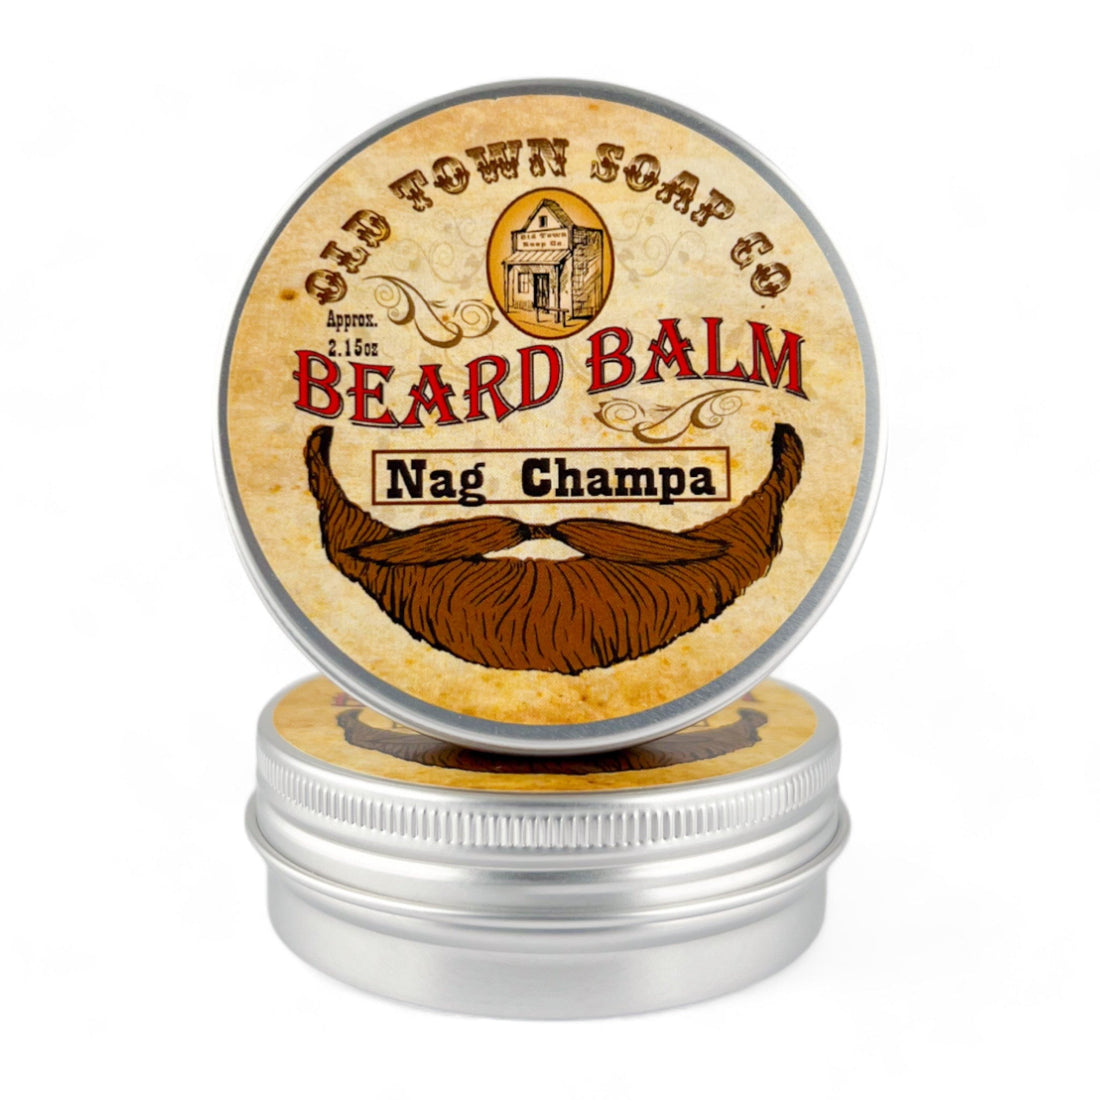 Nag Champa Beard Balm - Old Town Soap Co.